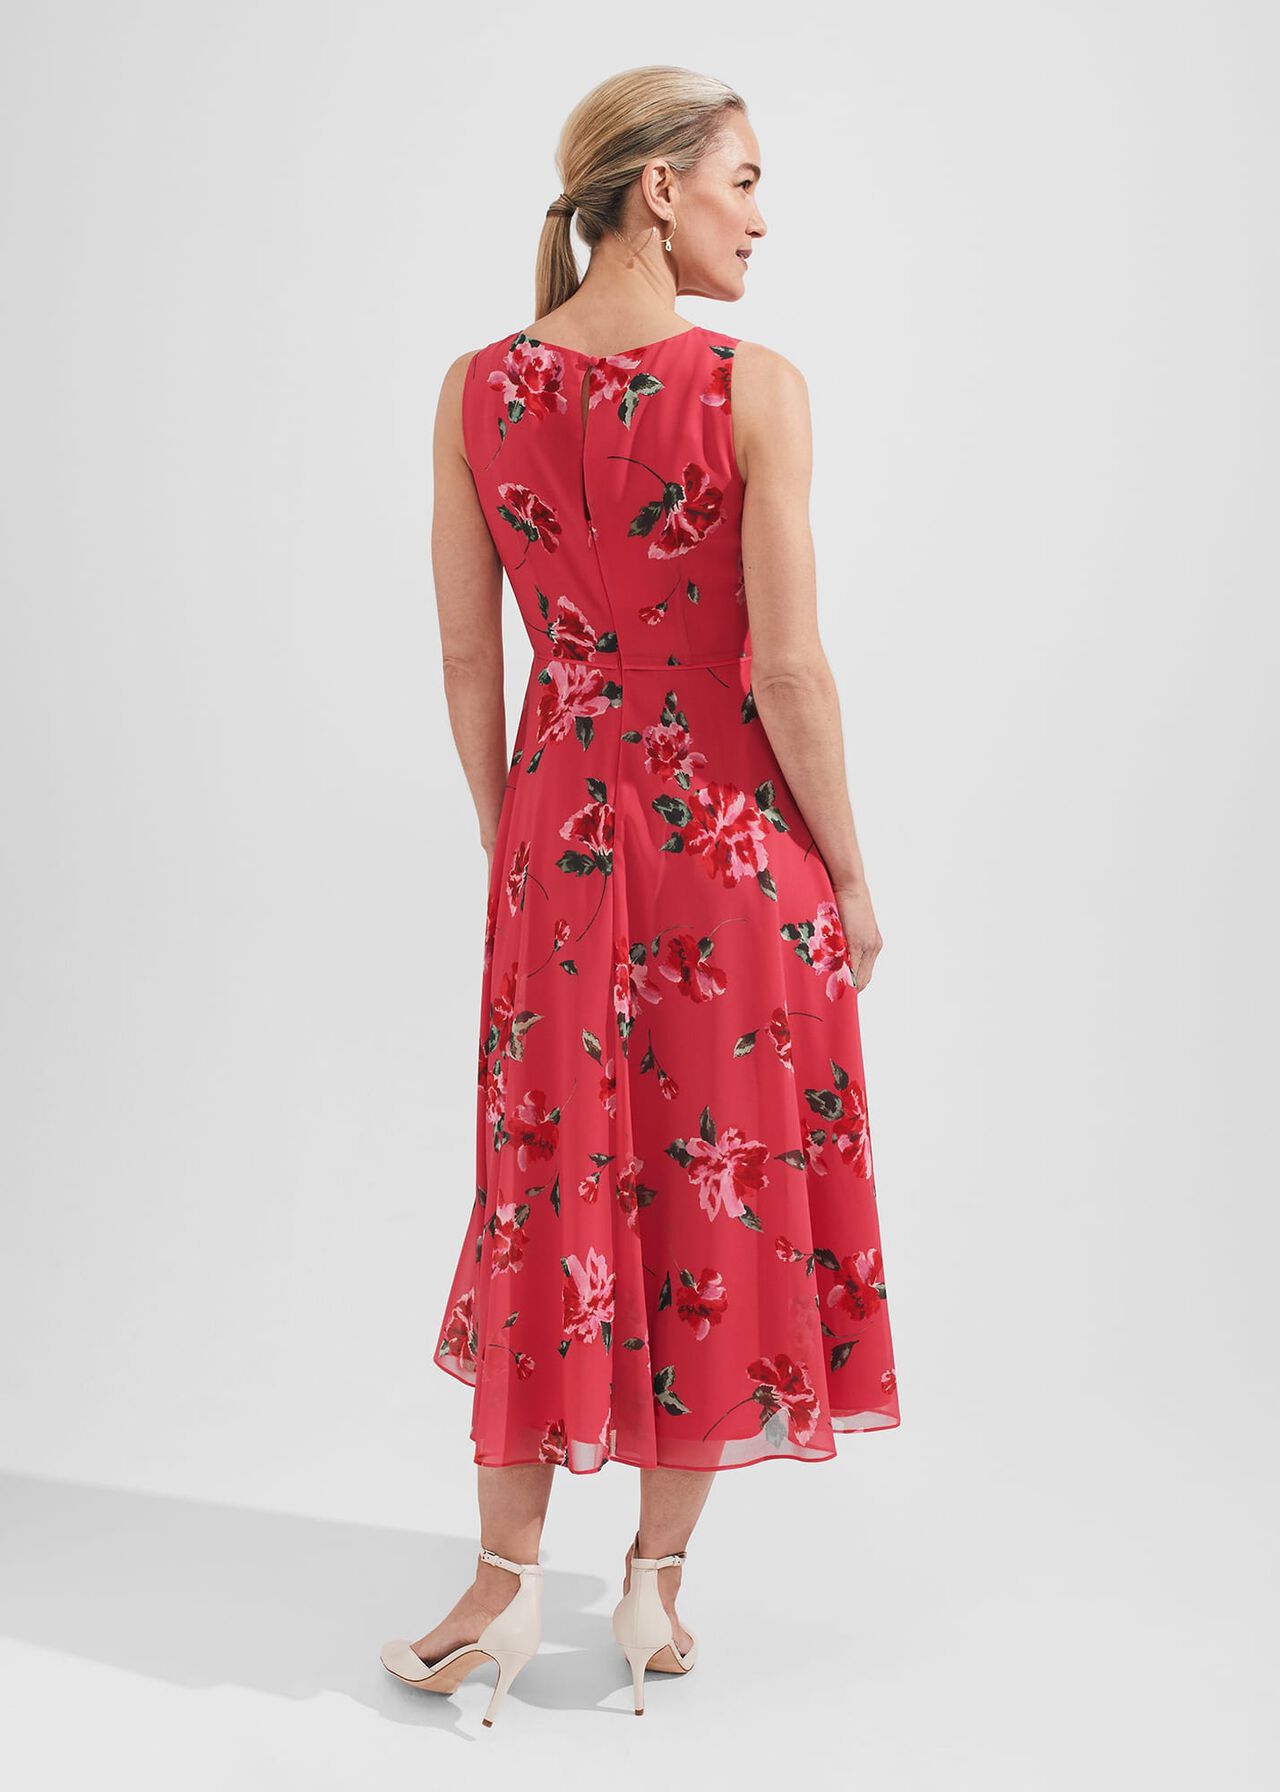 Carly Floral Midi Dress, Pink Red Multi, hi-res